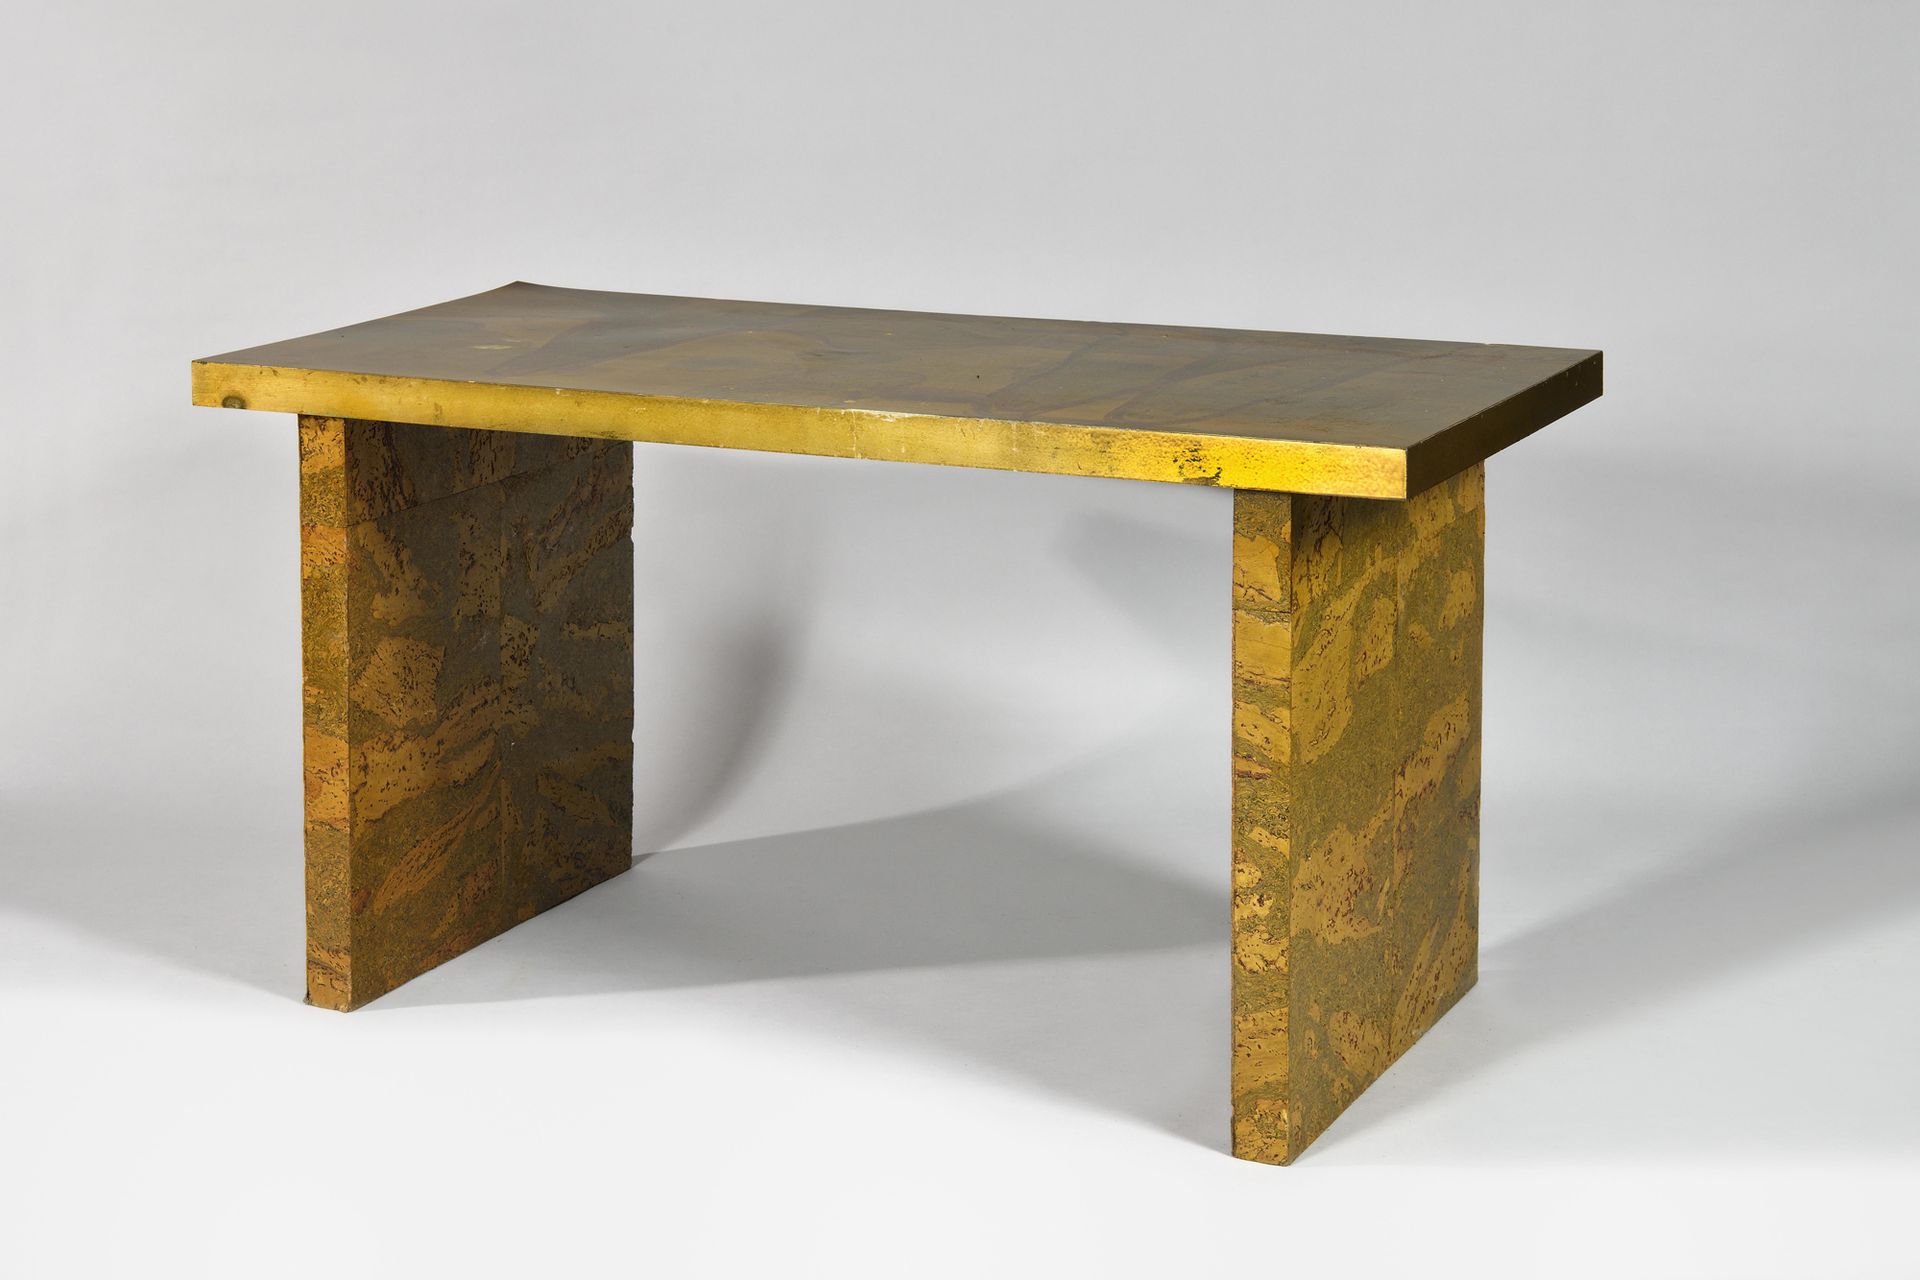 Null 
可能是美国人的作品

长方形桌子，表面镀有氧化黄铜，侧面实心腿上覆盖有金色清漆的软木。

磨损、氧化、脱落

高度 : 73 cm - 长度 : 6&hellip;